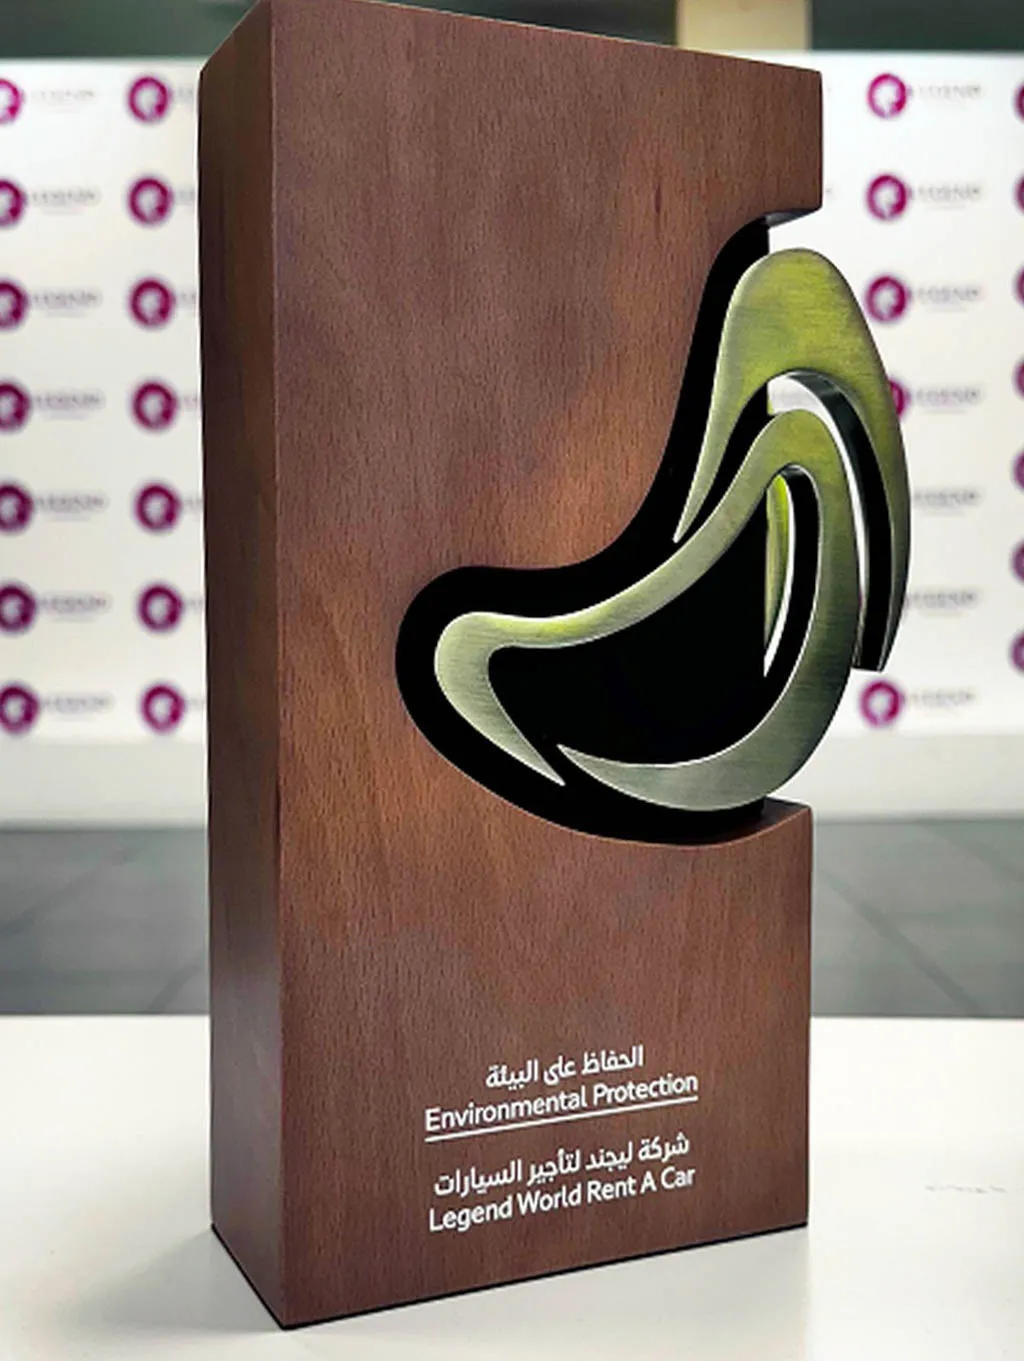 # 006 Of 009 Dubai Sustrans Award June 09, 2024